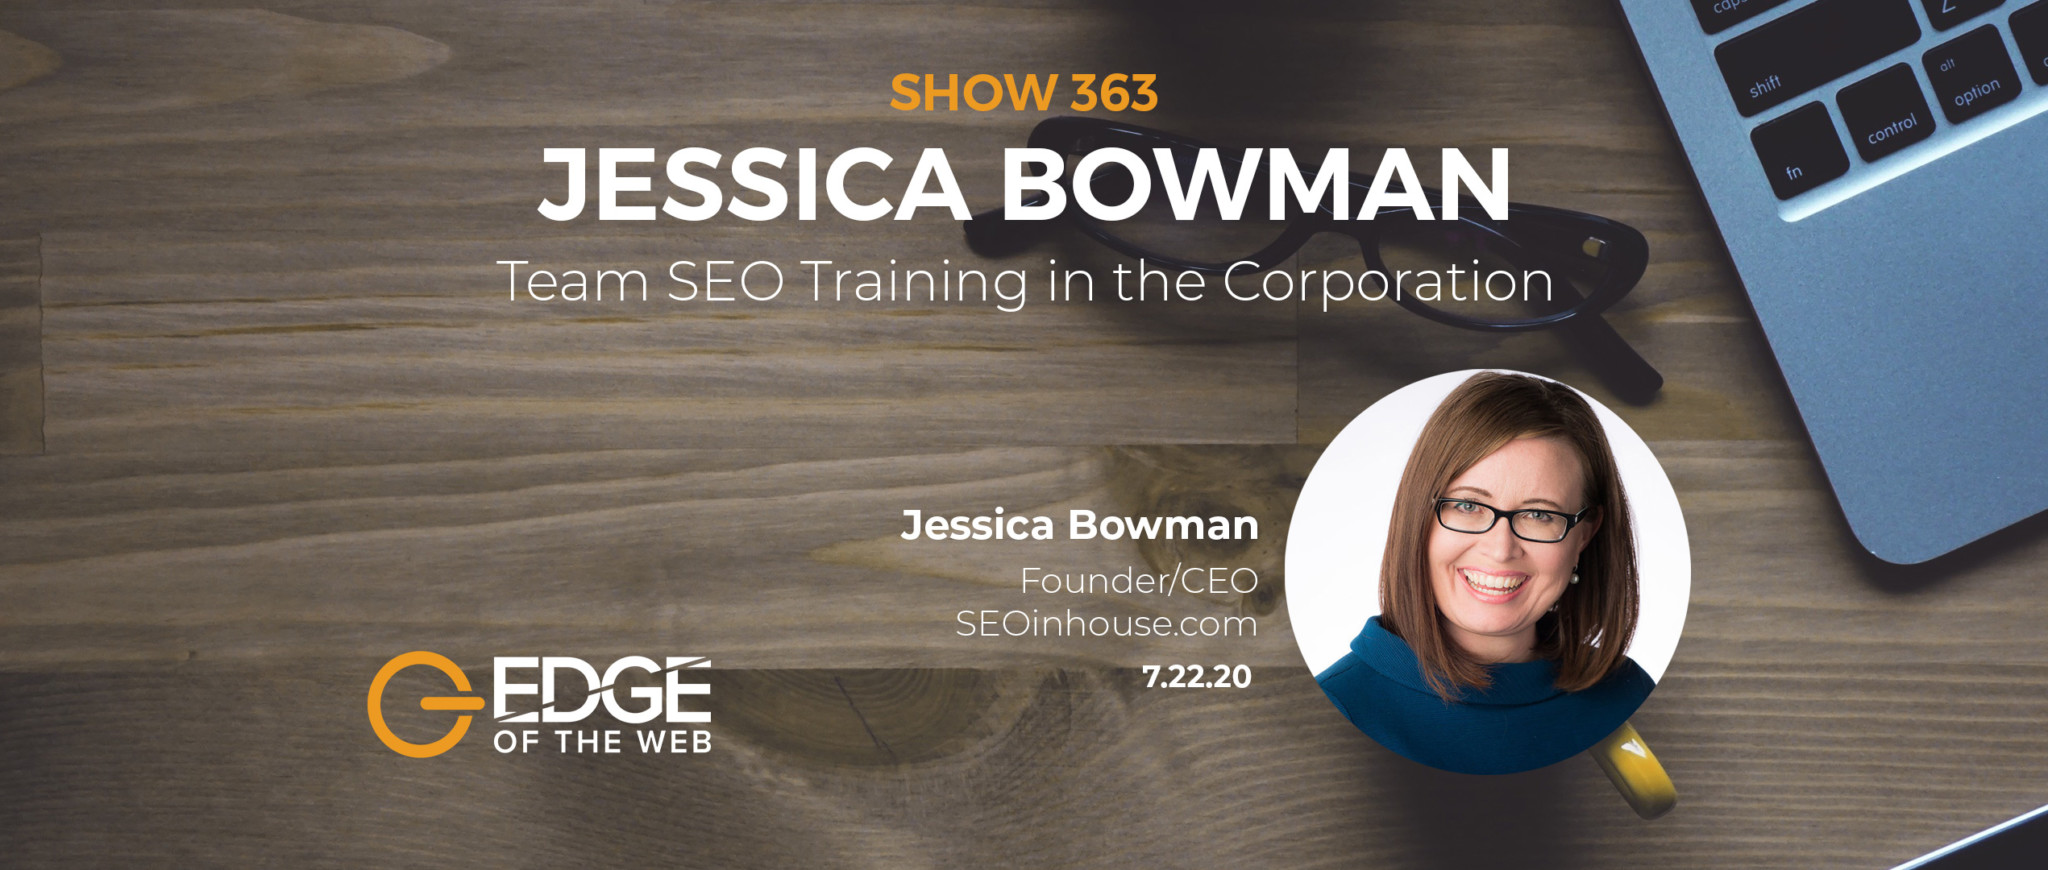 Jessica Bowman EDGE Featured Image EP363